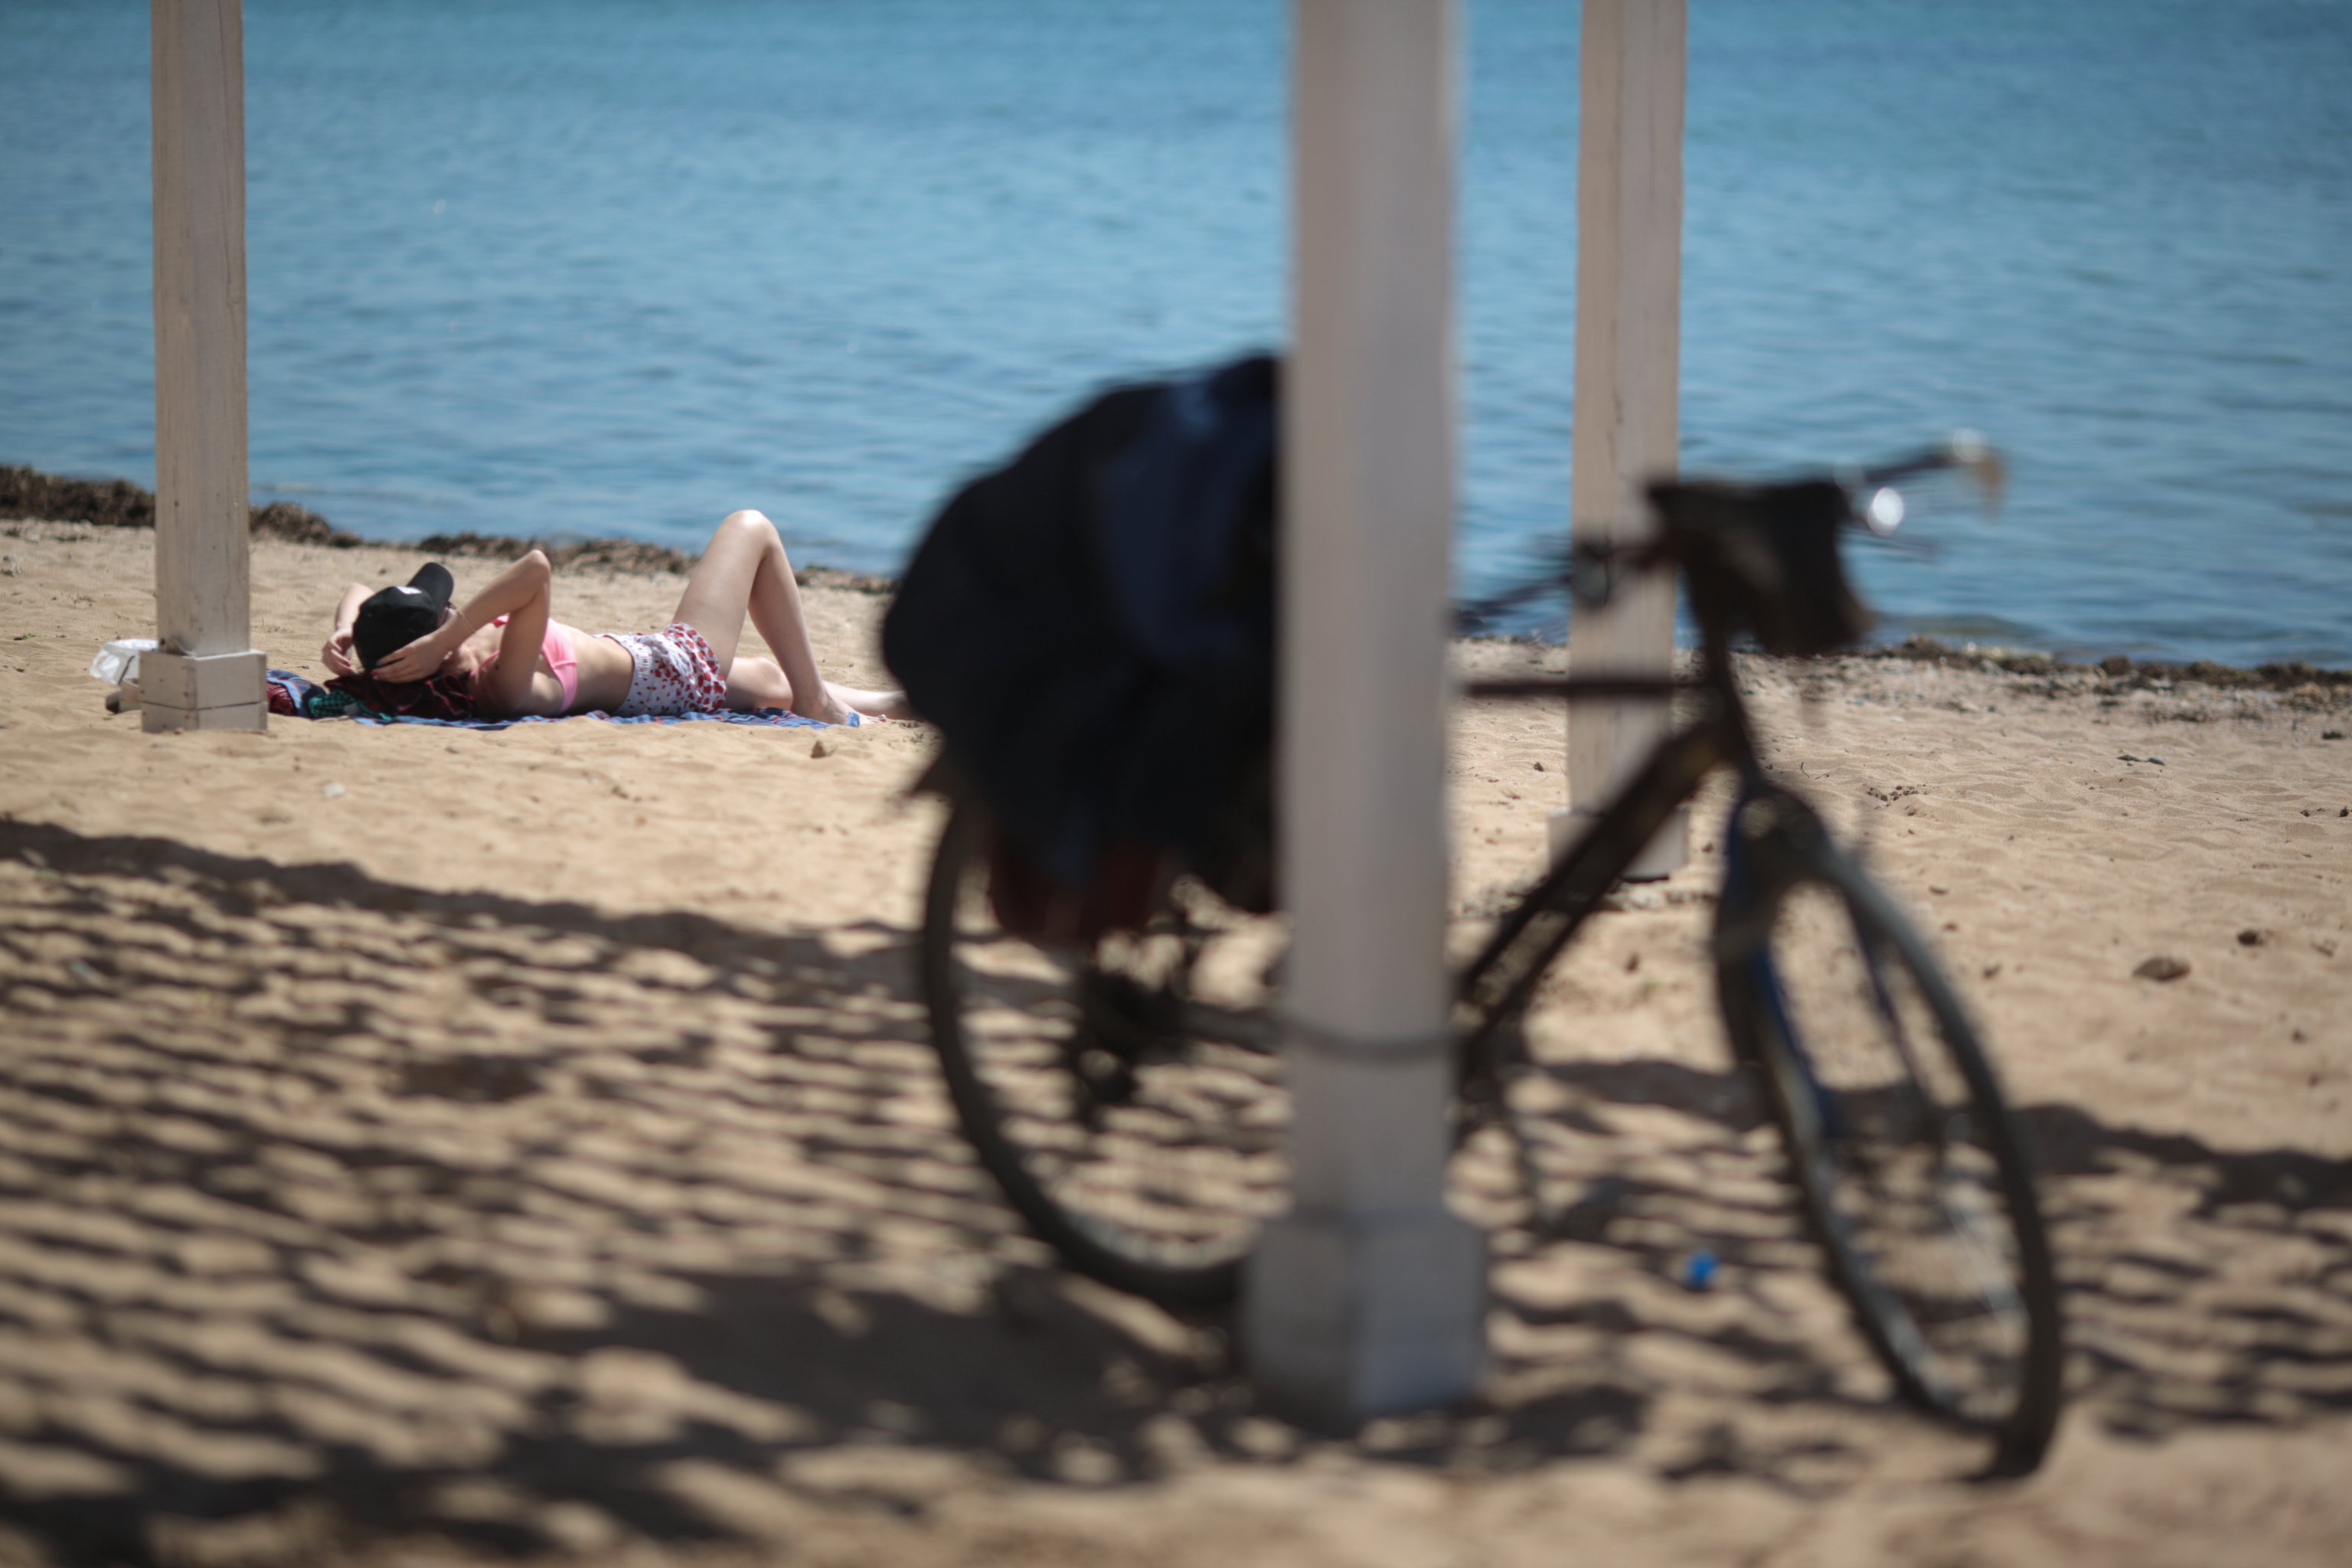 A vacationer enjoys herself on a beach in Yevpatoriya